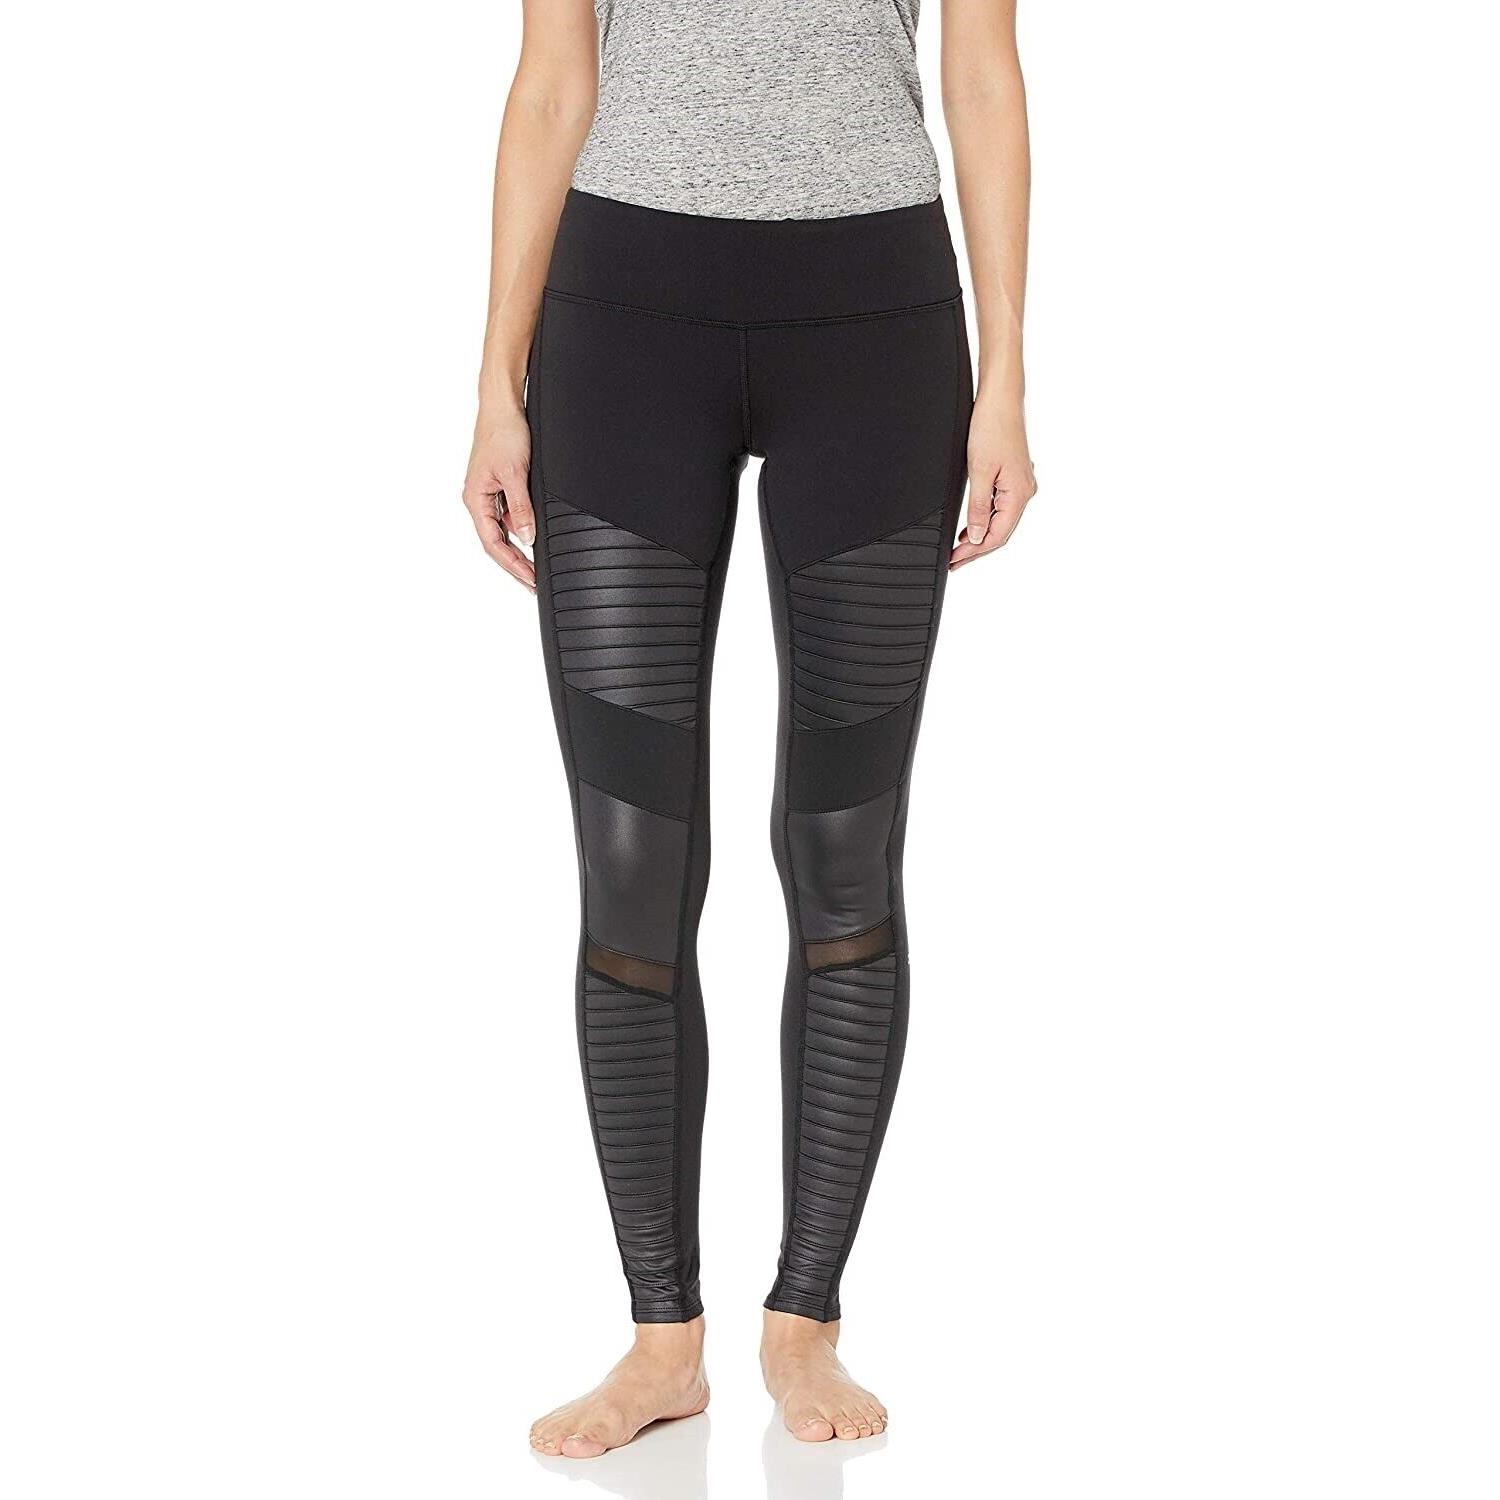 Alo 241191 Womens Yoga Activewear Leggings Mesh Panels Solid Black Size Medium